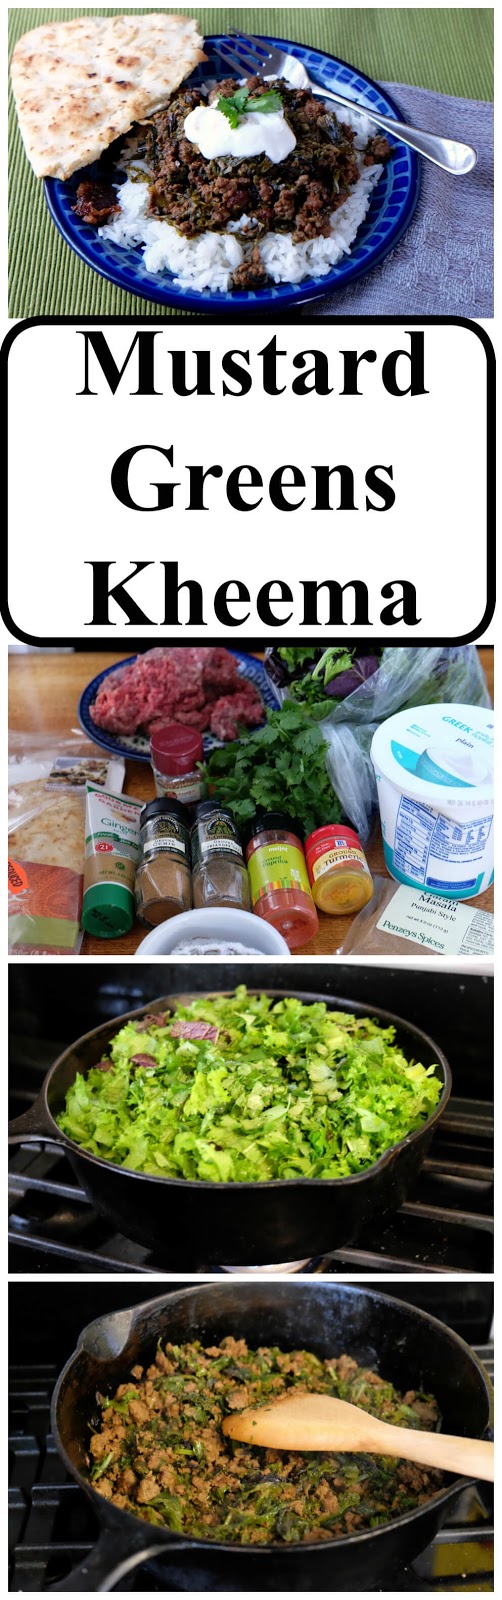 http://www.farmfreshfeasts.com/2015/06/mustard-greens-kheema-ground-beef-and.html